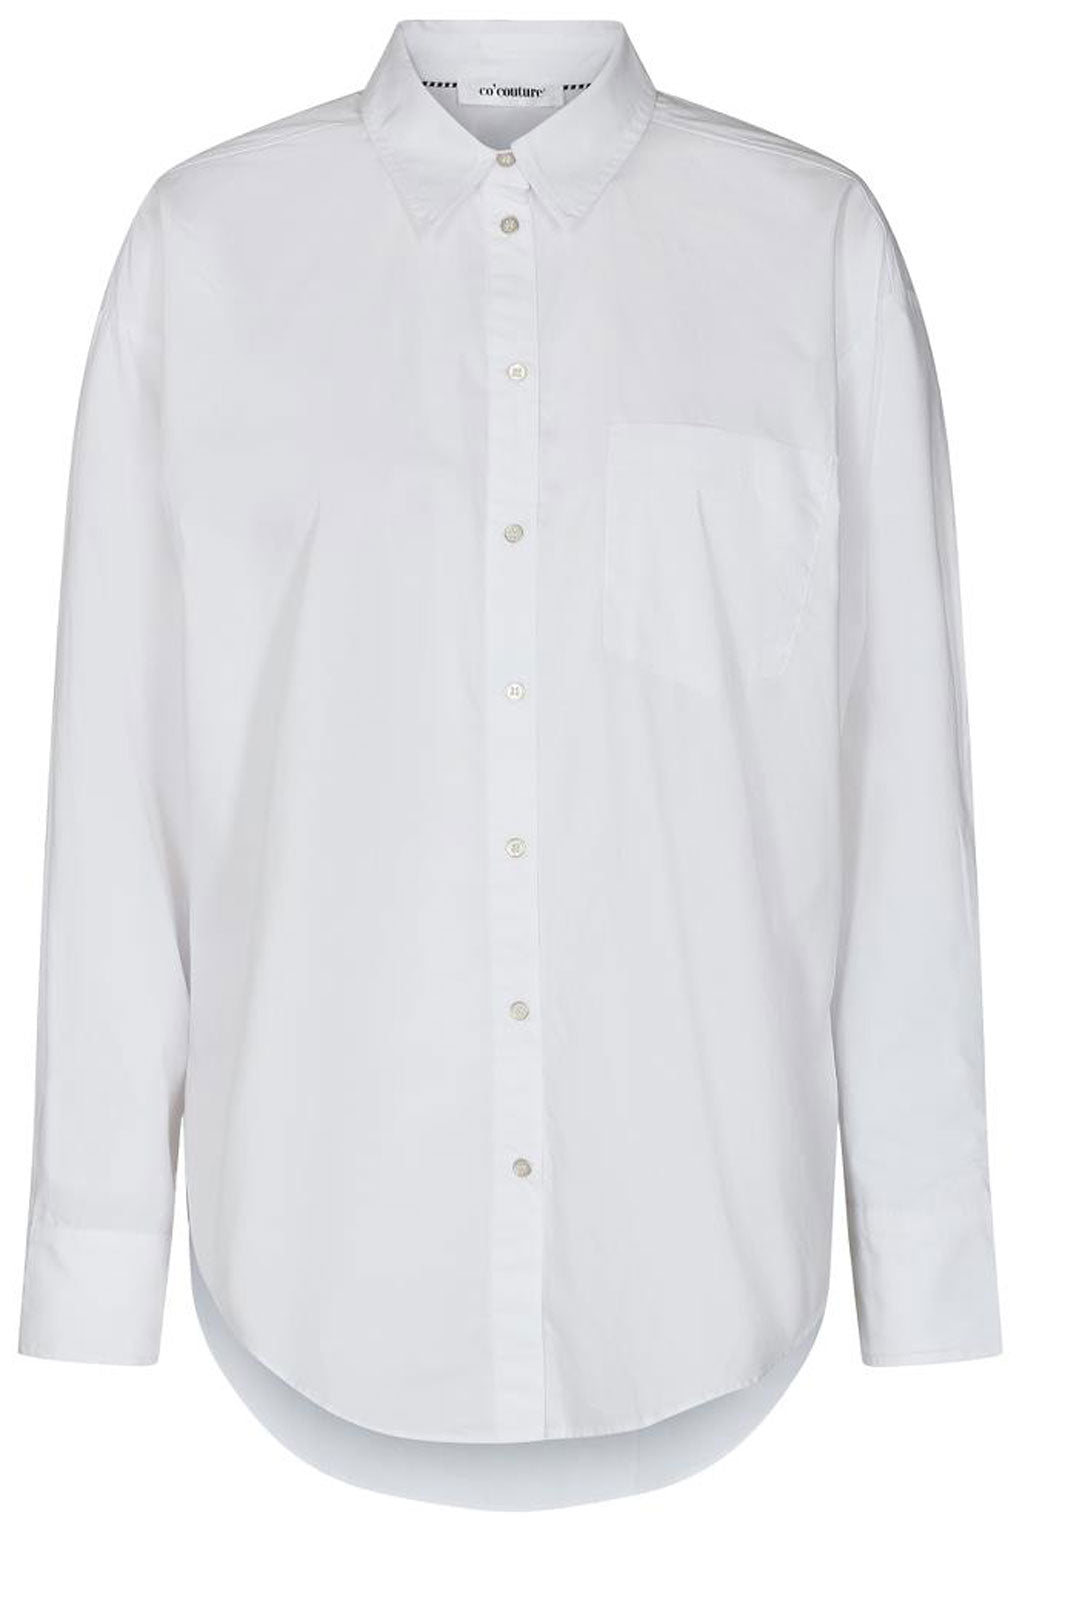 Co´couture - Coriolis Oversize Shirt - White Skjorter 